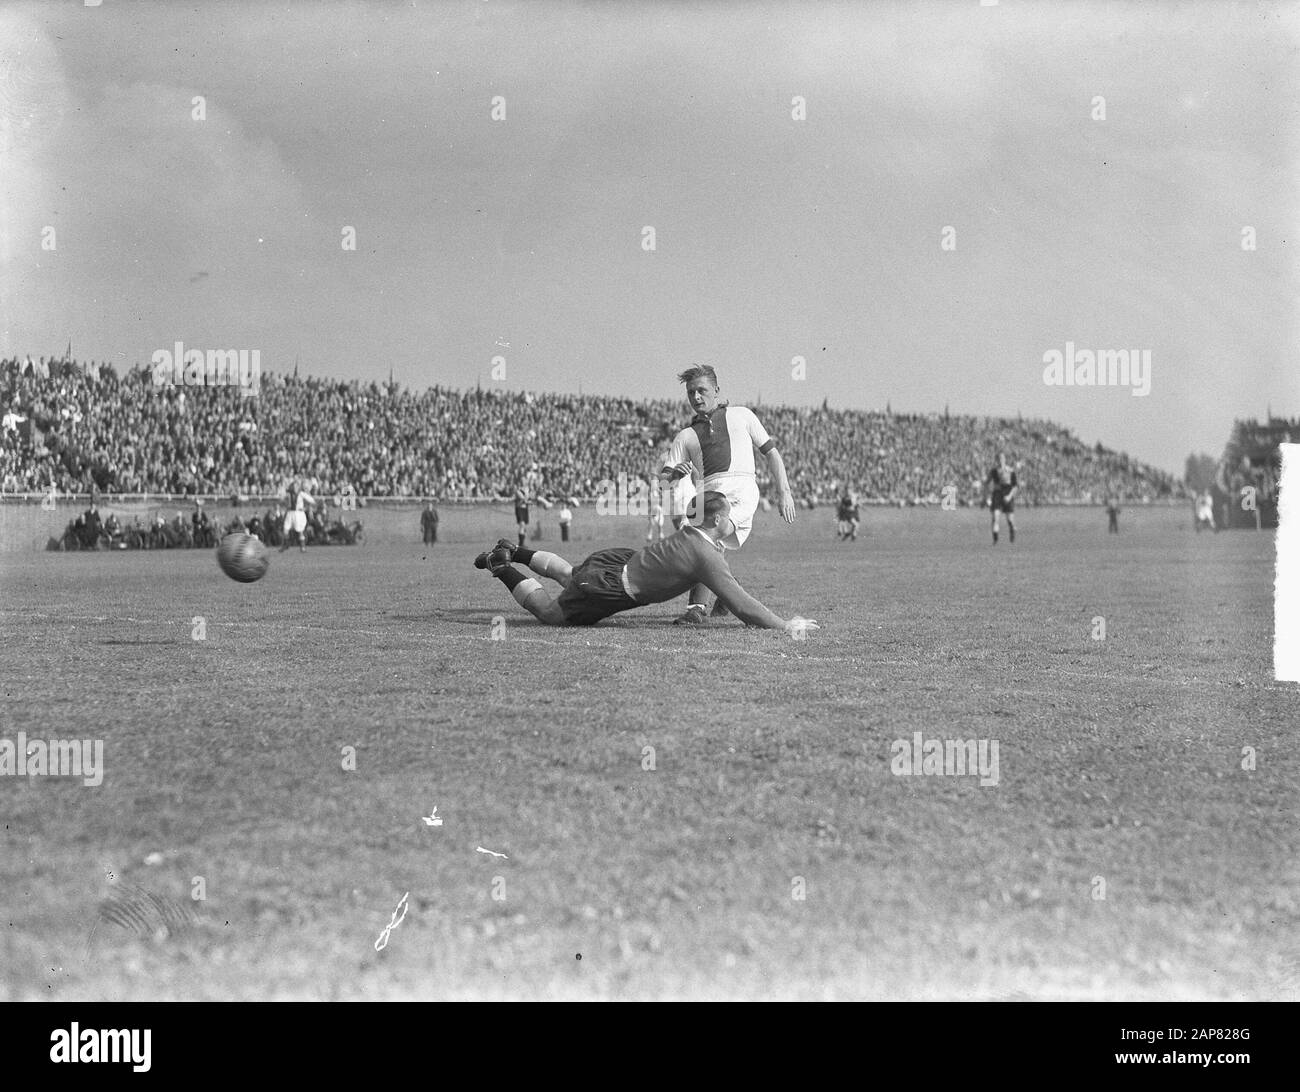 Ajax-Gooi 3-0 Date: 2 October 1949 Keywords: sport, football Stock Photo